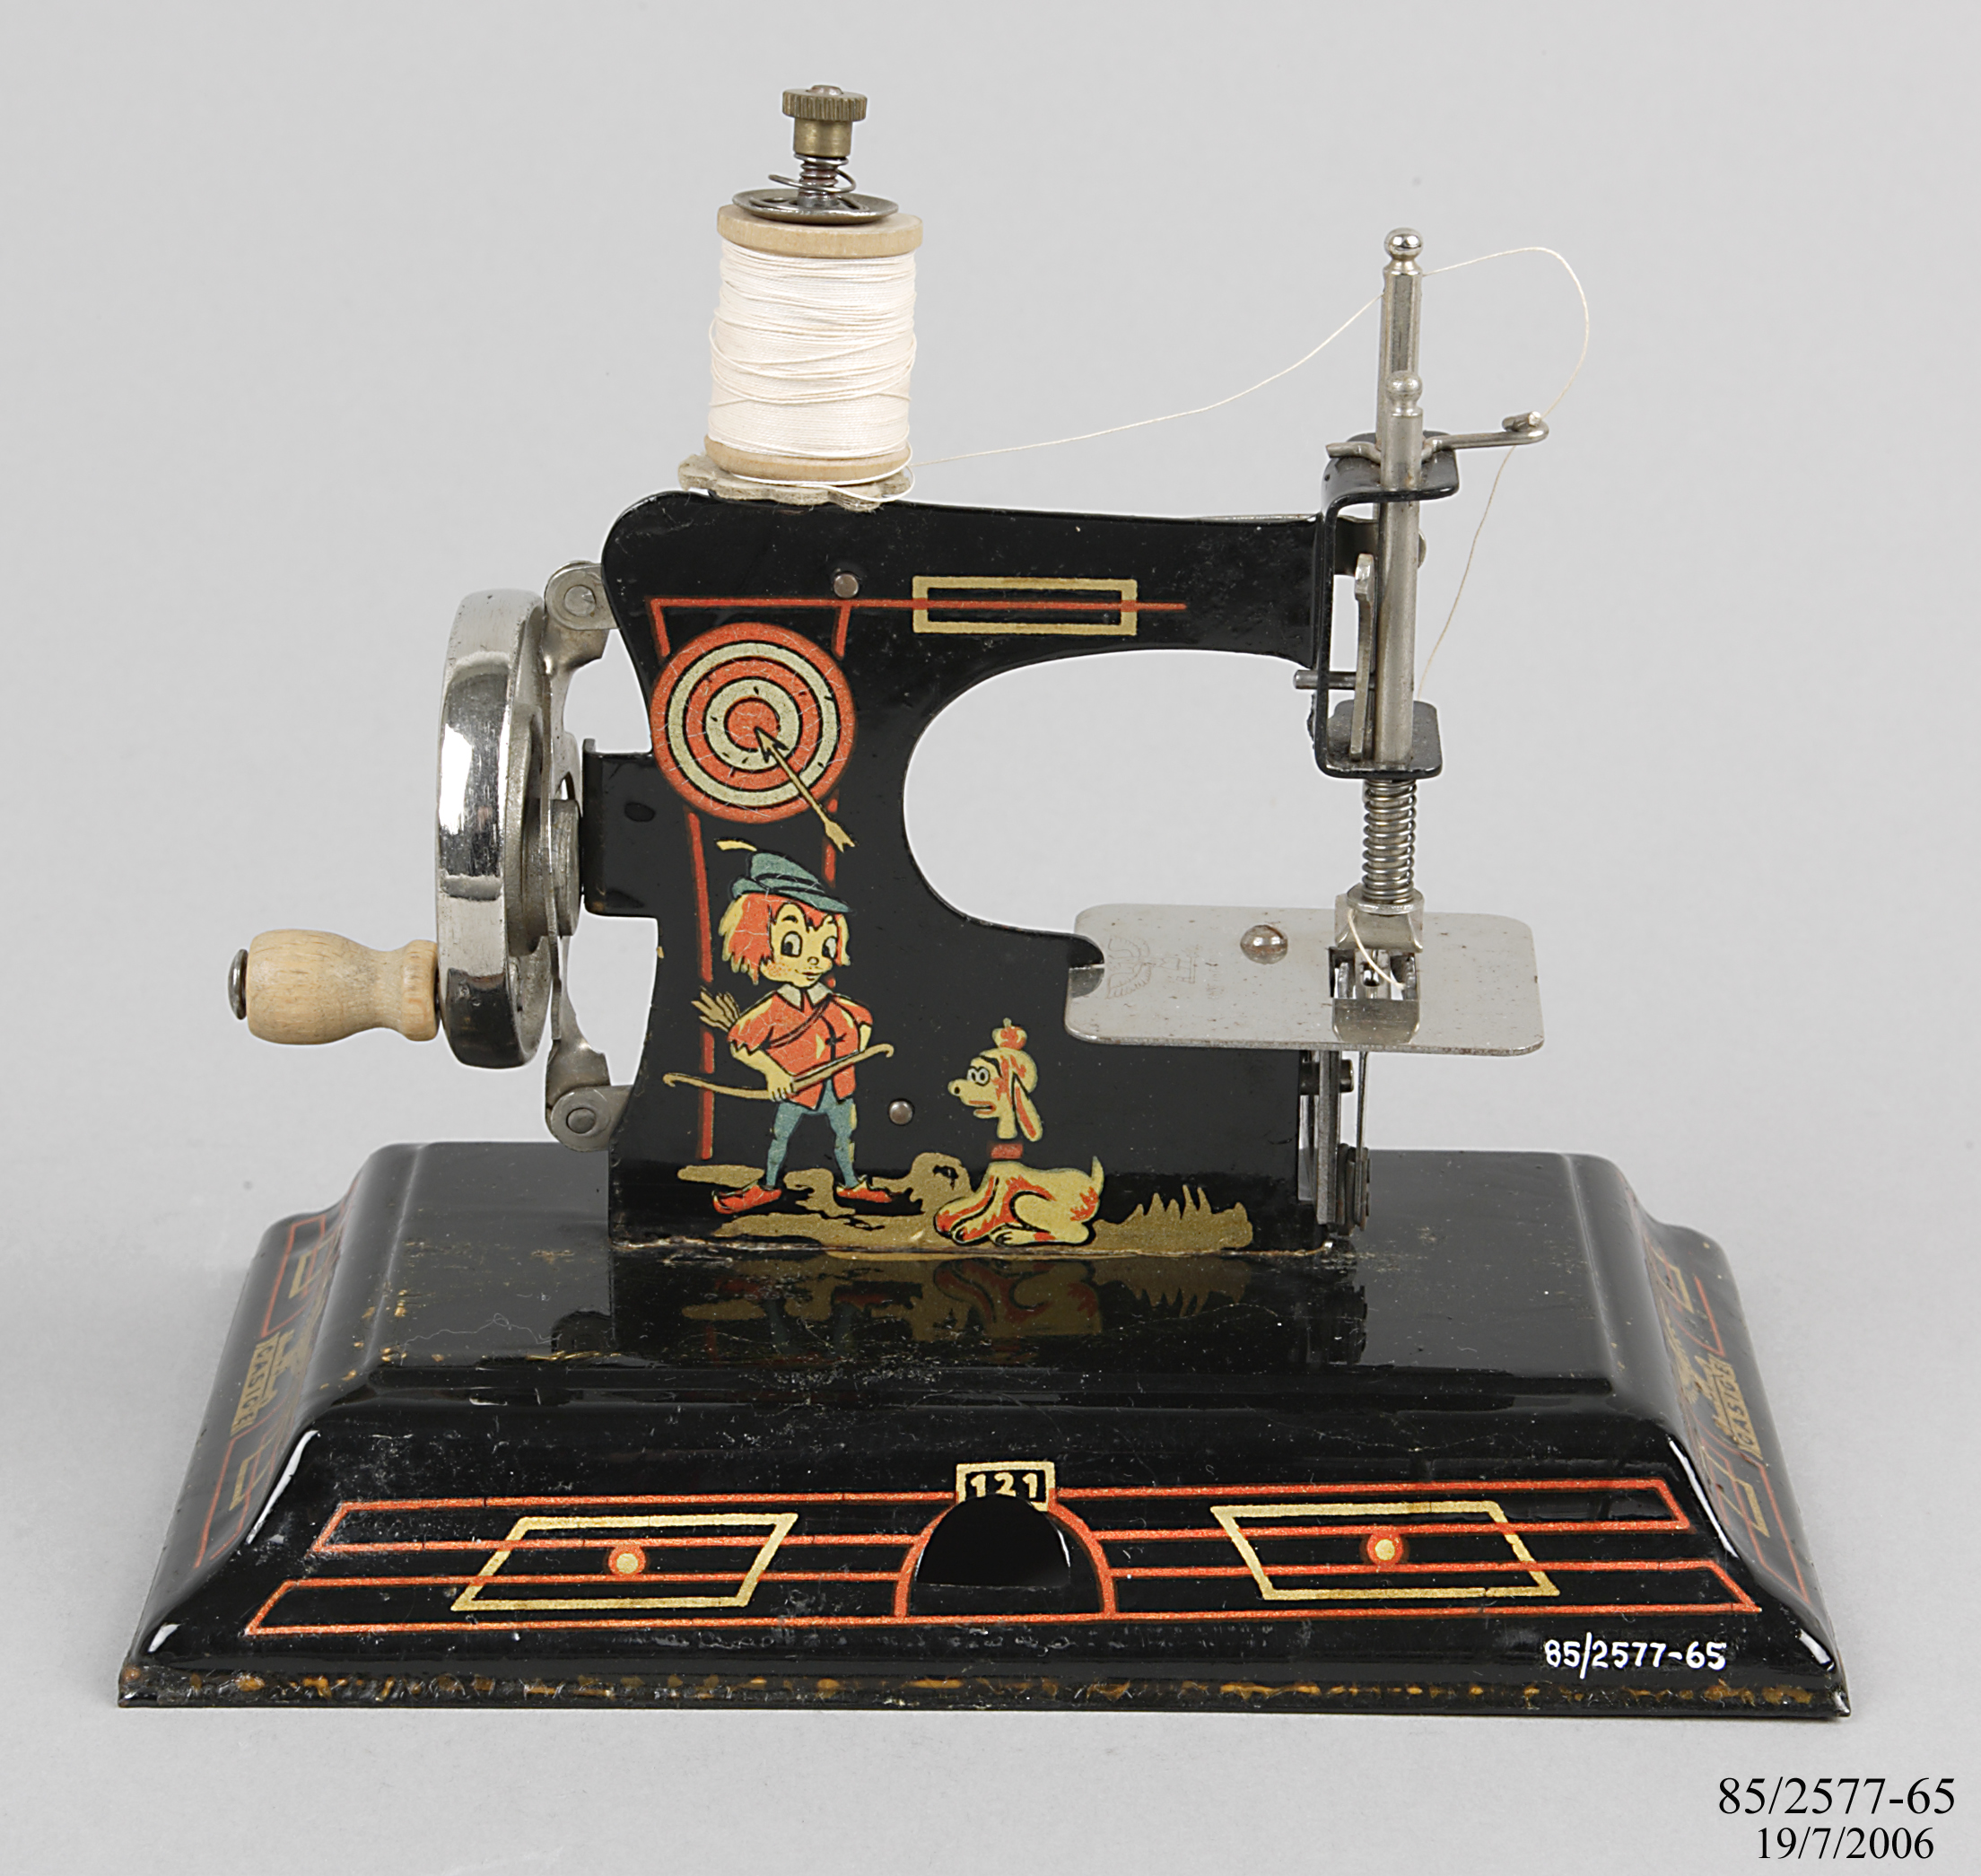 Casige toy sewing machine